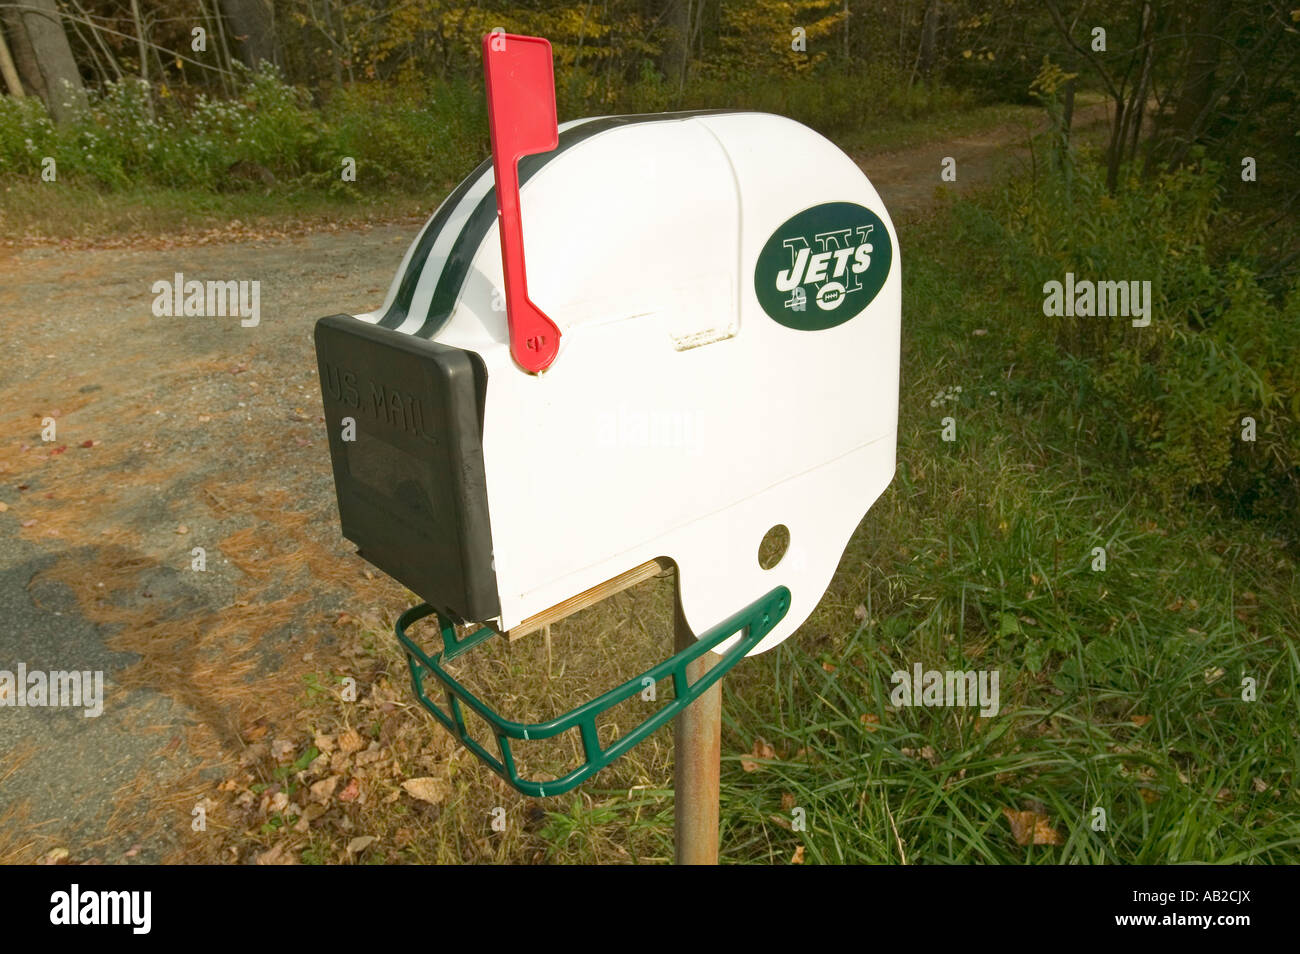 New York Jets NFL football helmet boîte aux lettres dans Massachusetts New England campagne Banque D'Images